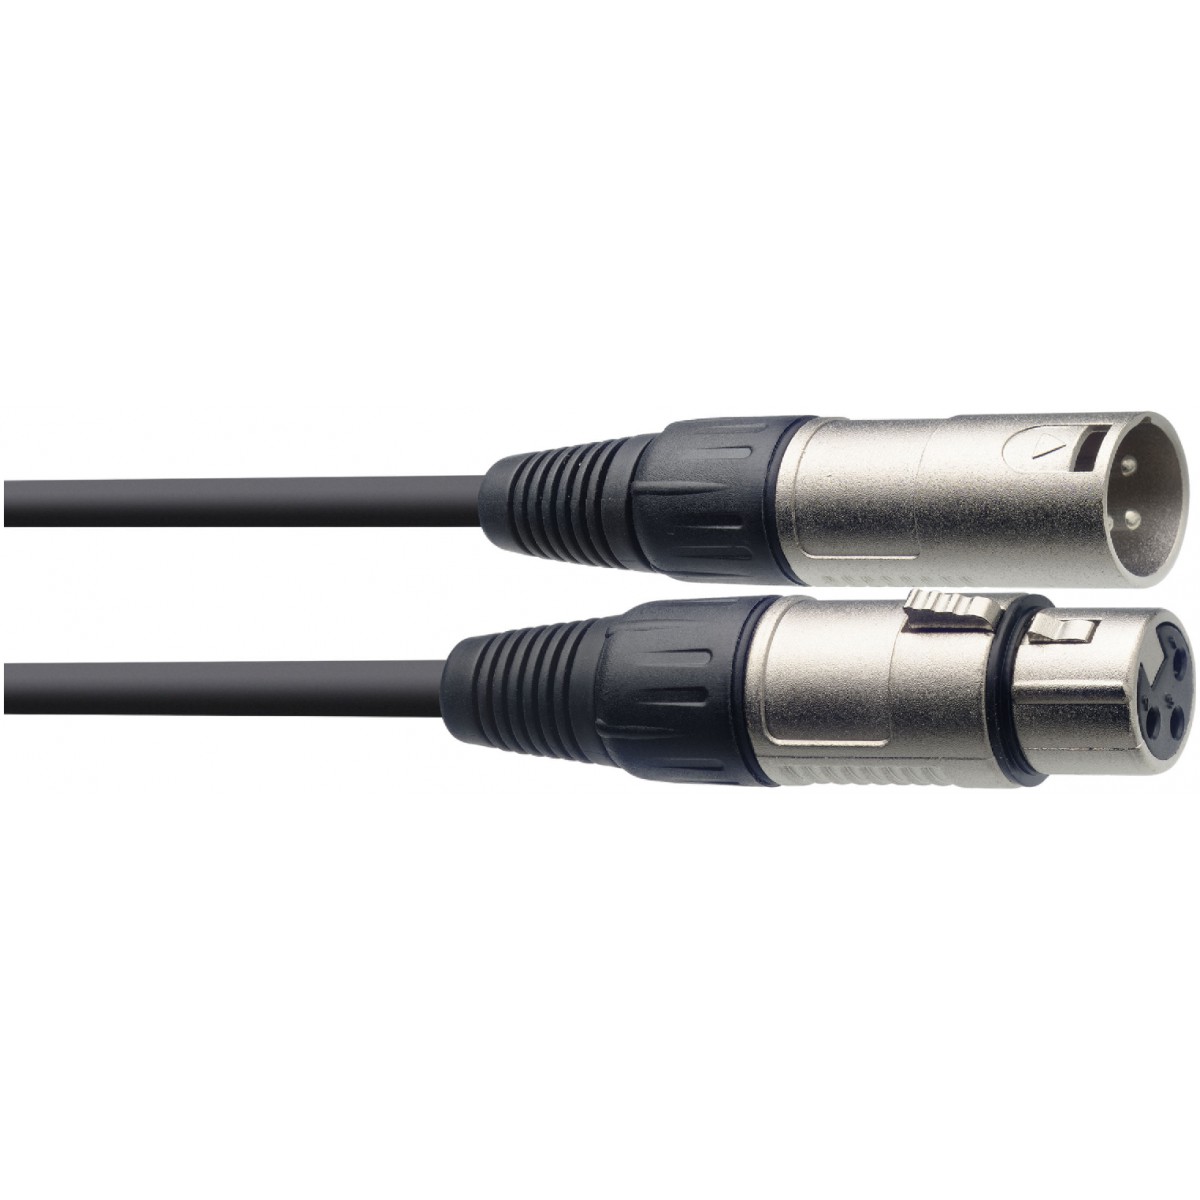 Stagg SMC3, mikrofonní kabel XLR/XLR, 3m